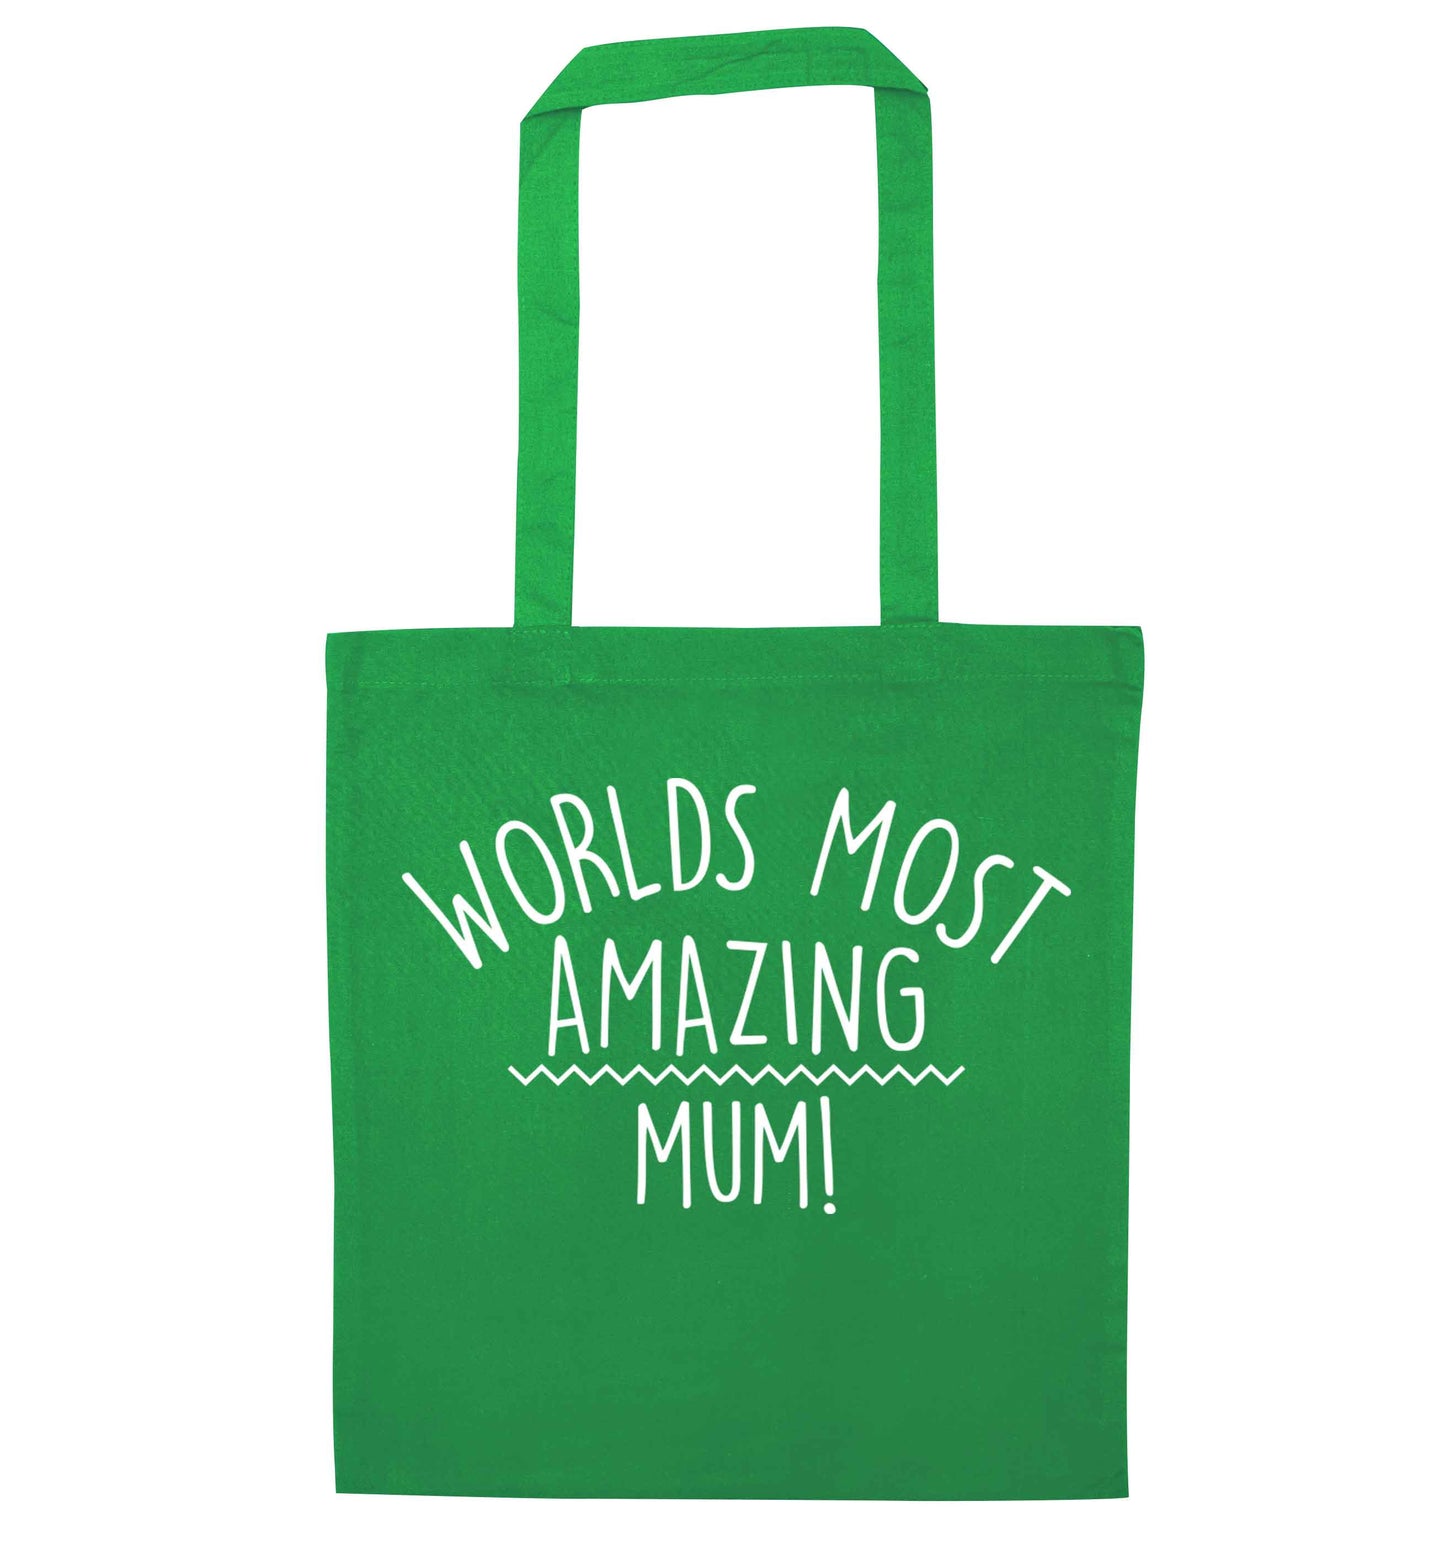 Worlds most amazing mum green tote bag